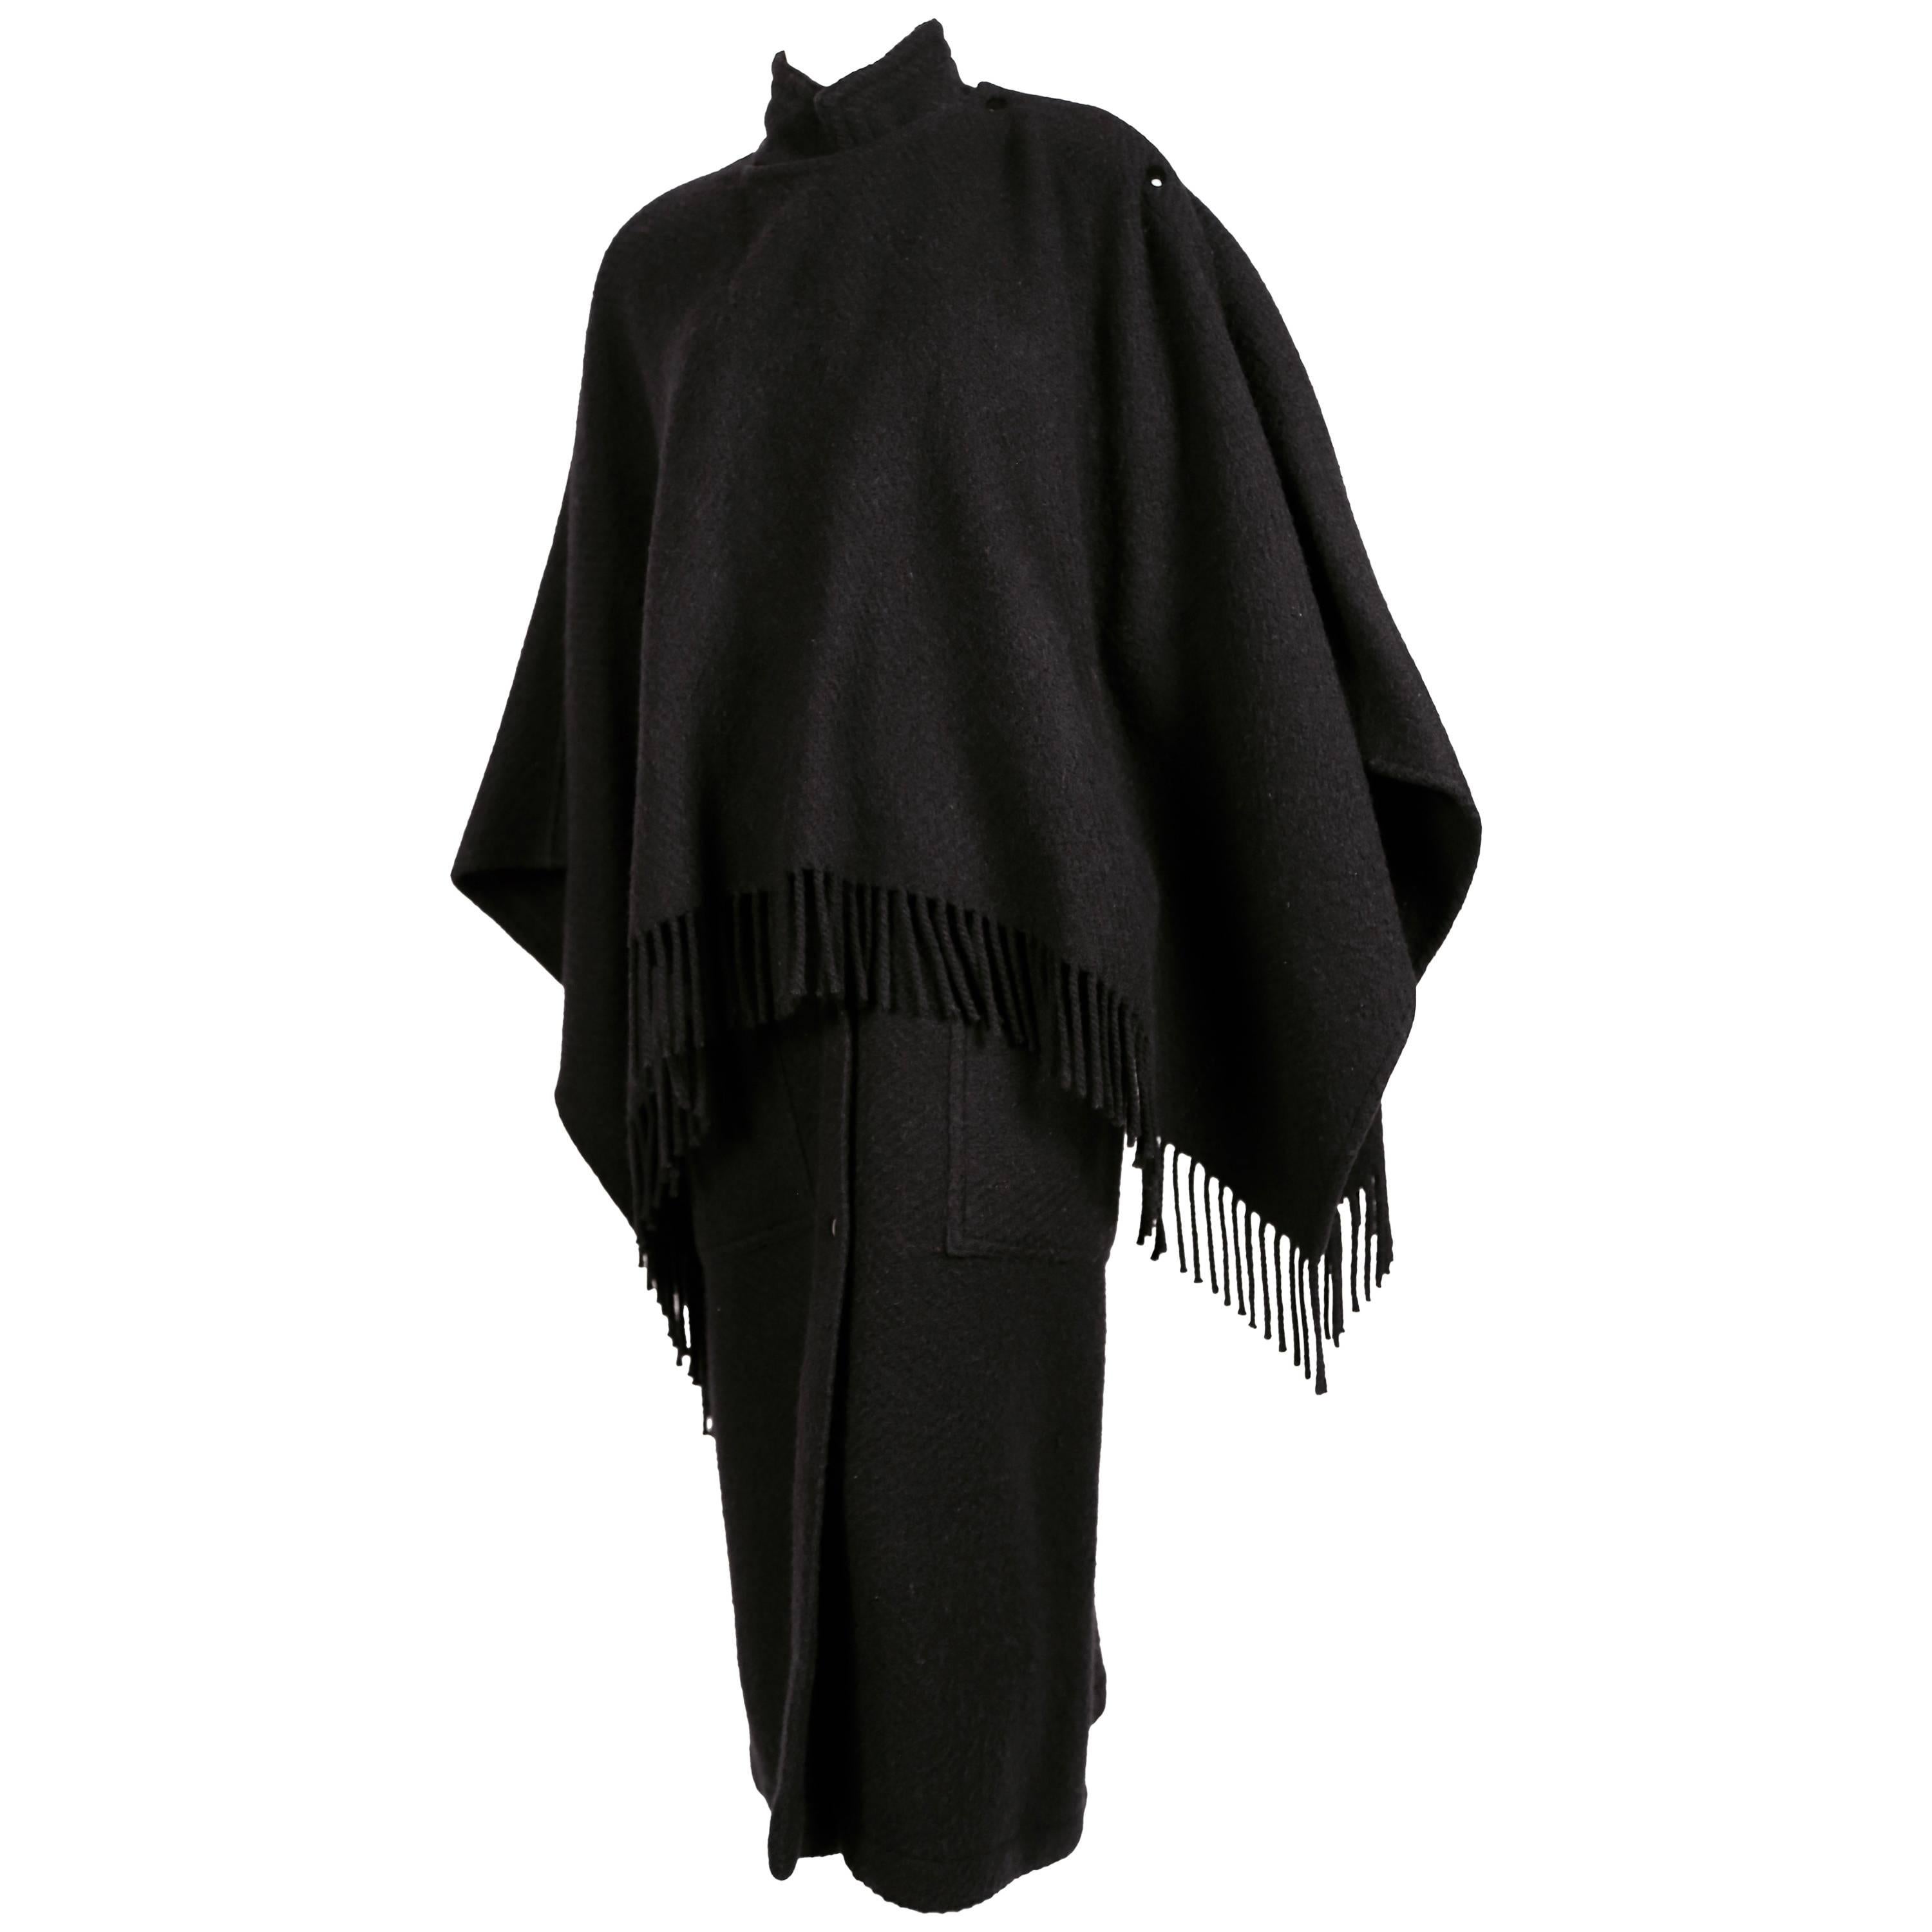 1980's JEAN-CHARLES DE CASTELBAJAC black cape coat with fringe